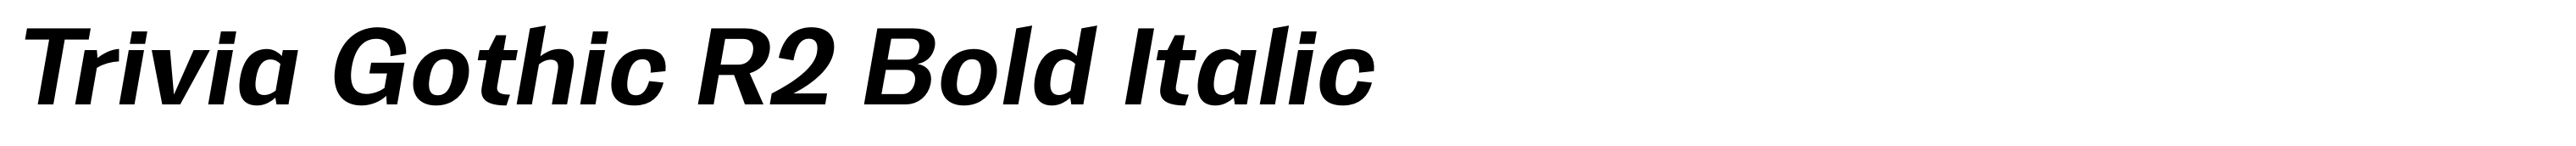 Trivia Gothic R2 Bold Italic